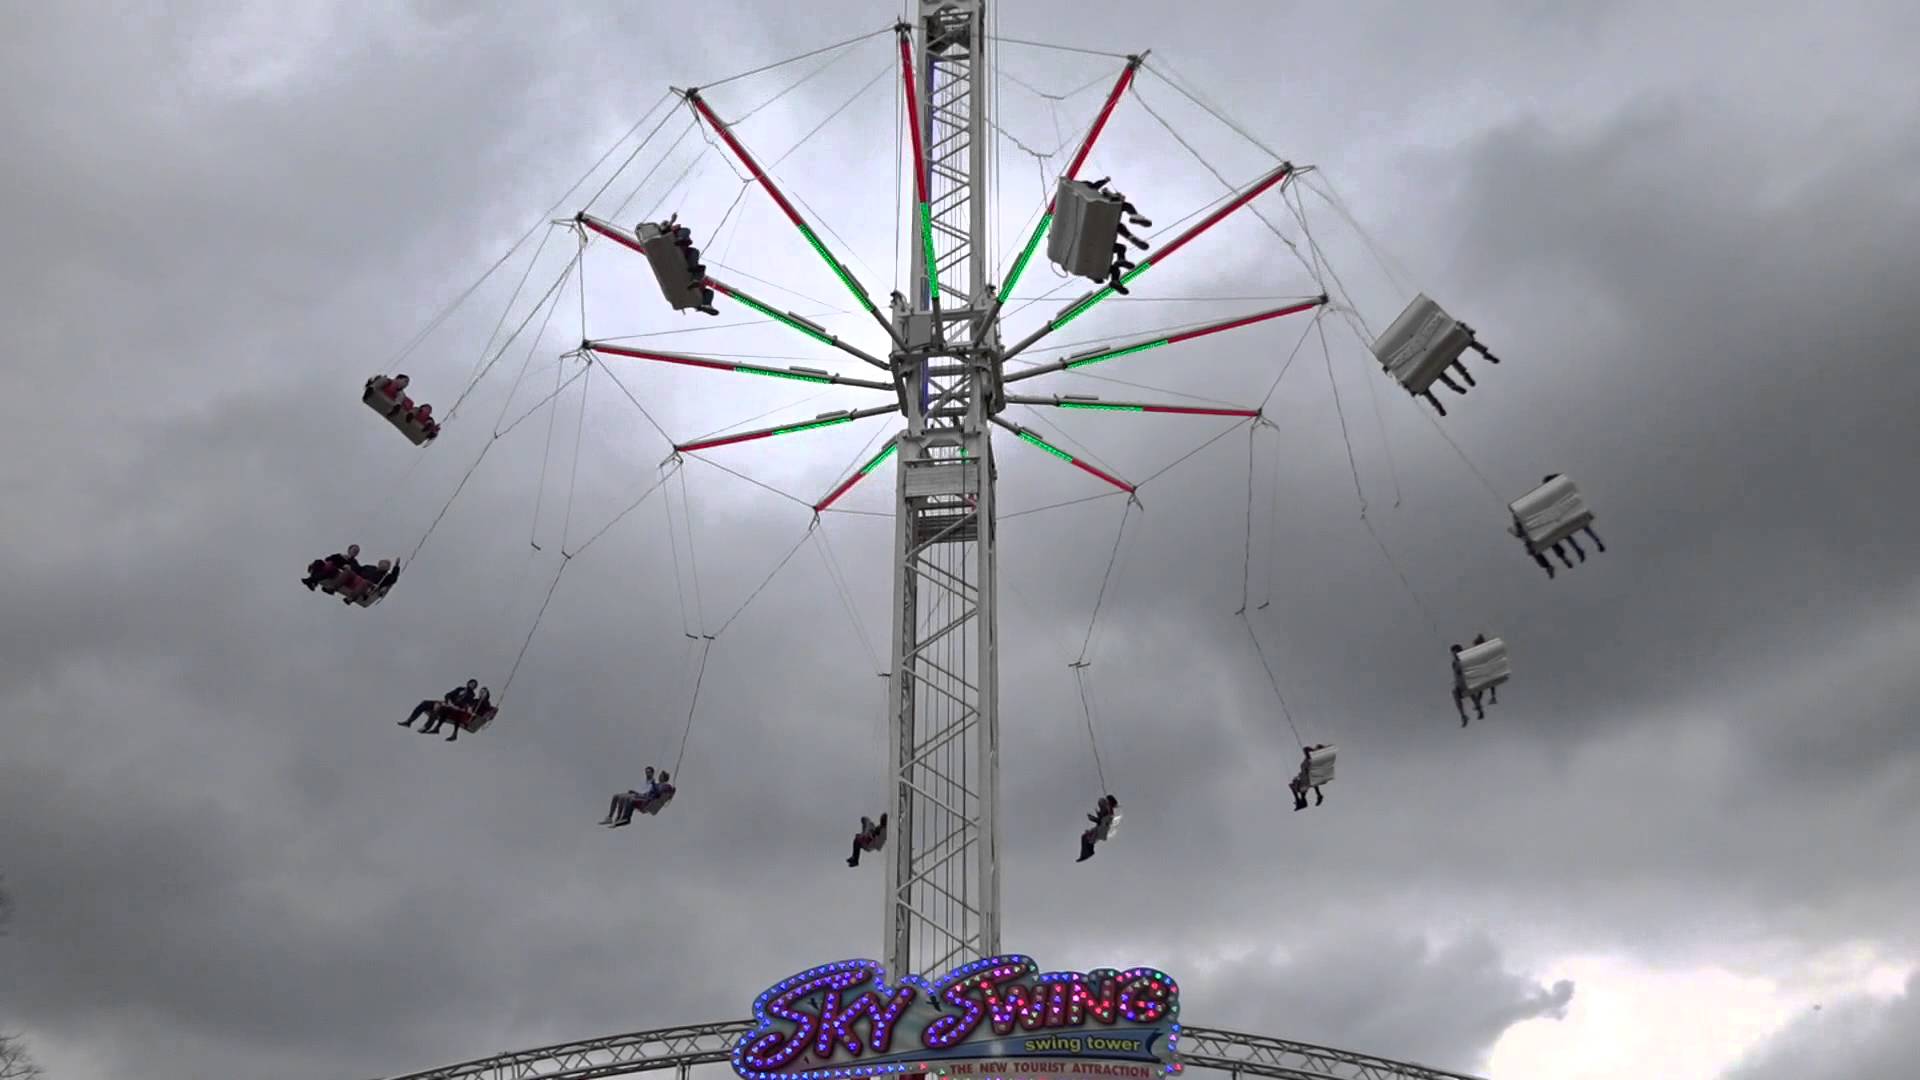 Darren Matthews' Sky Swing Offride @ Funderworld Bristol 2015 - YouTube